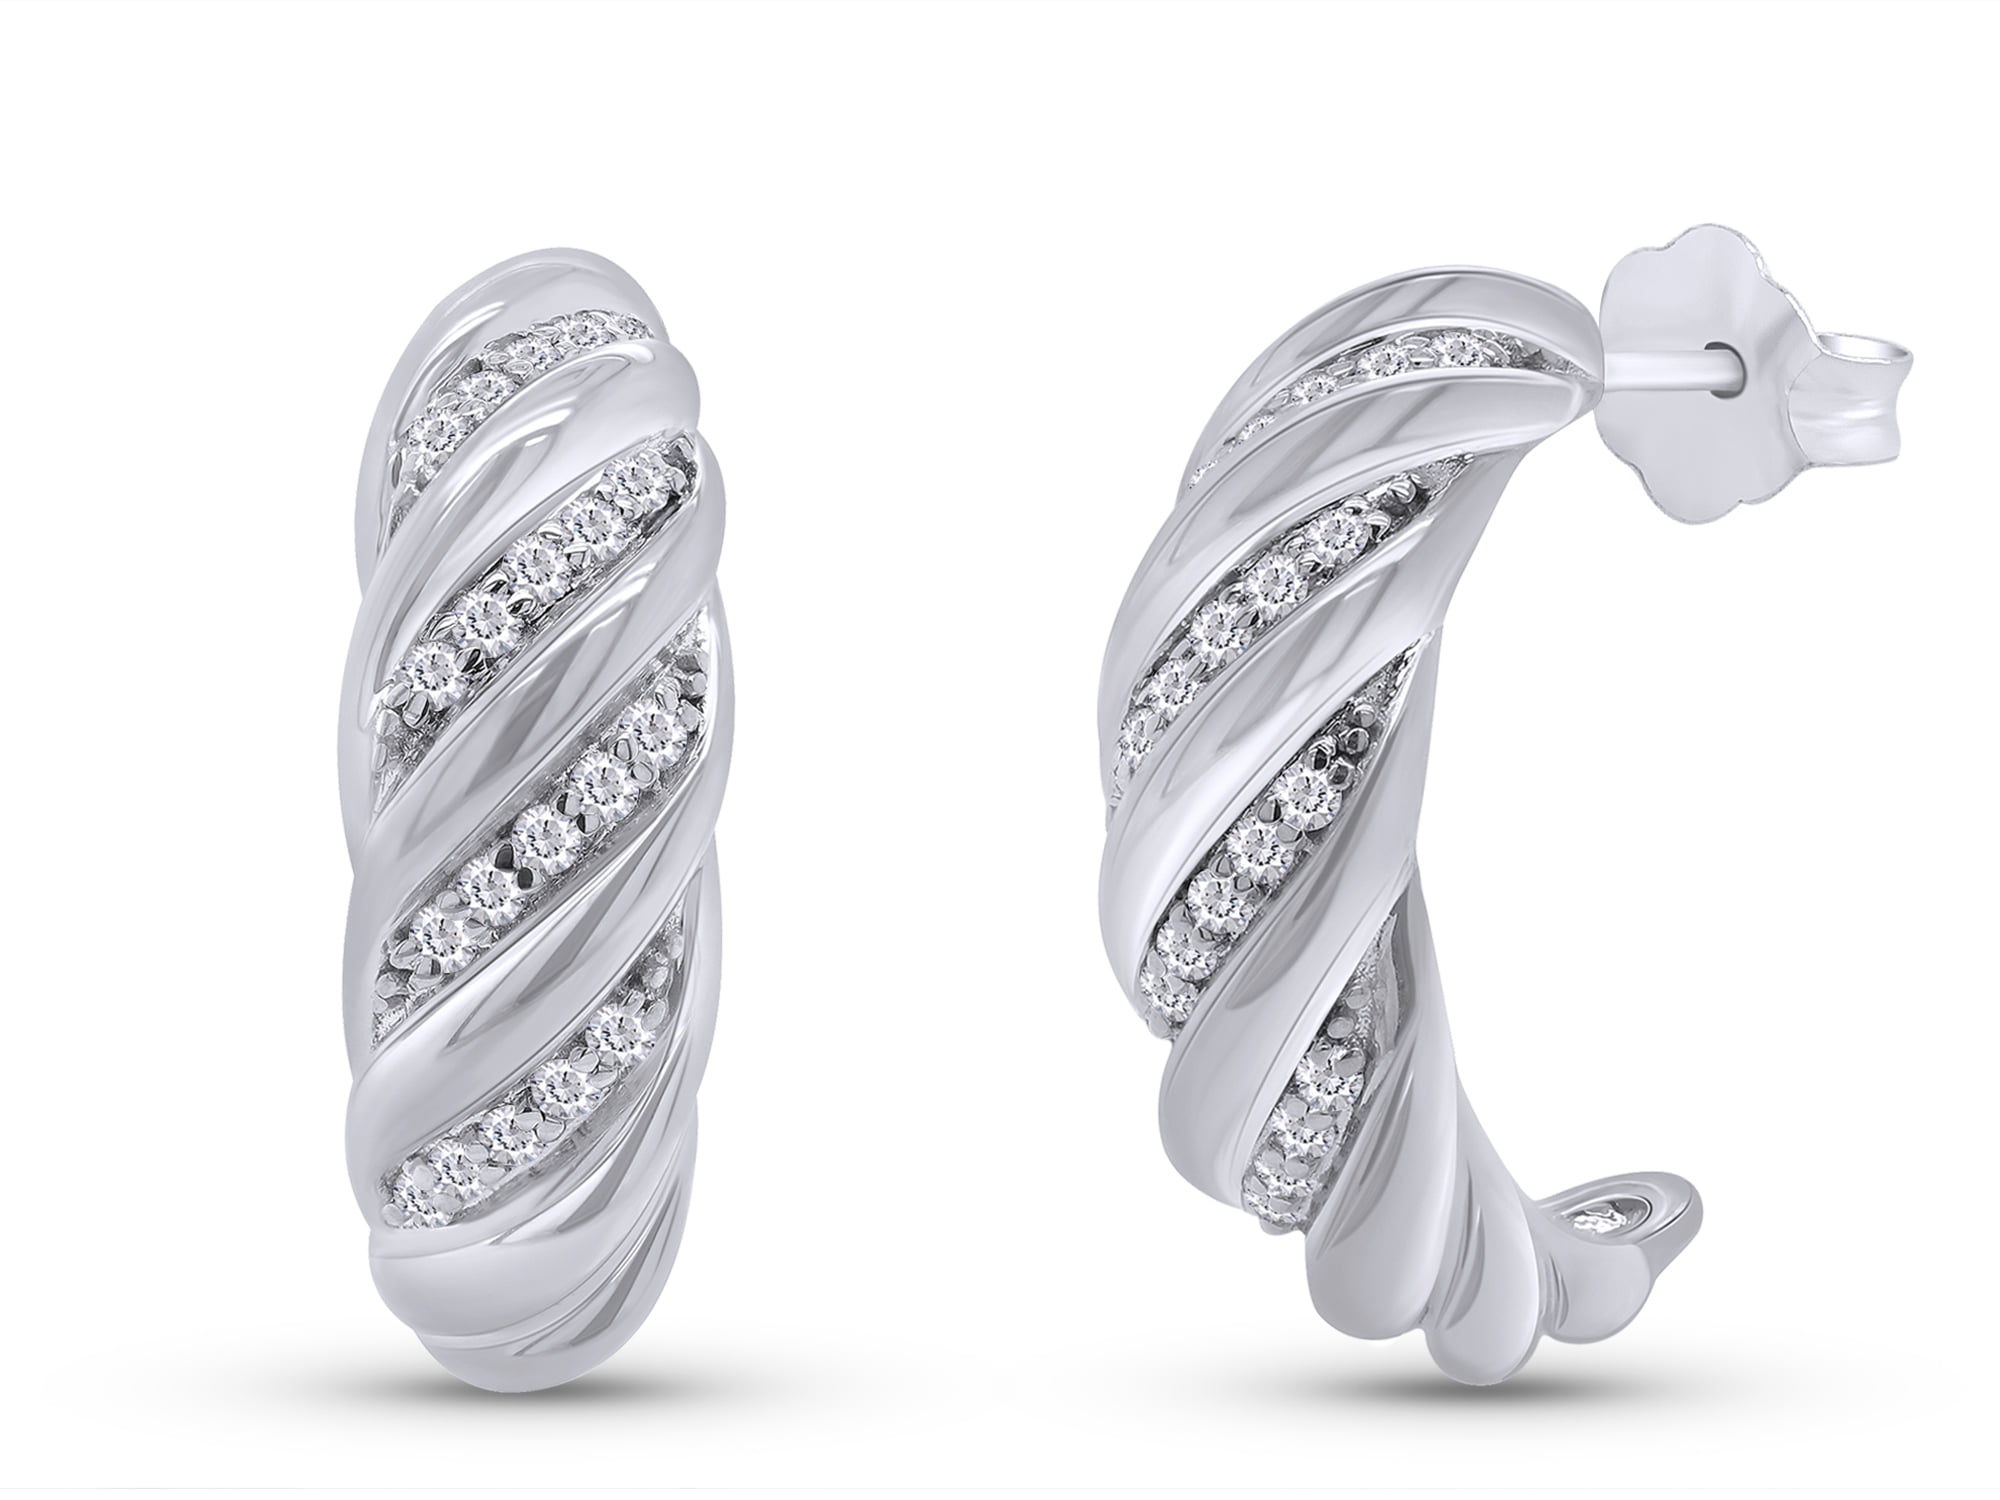 wishrocks Round Cut White Cubic Zirconia Hoop Earrings In Sterling Silver 